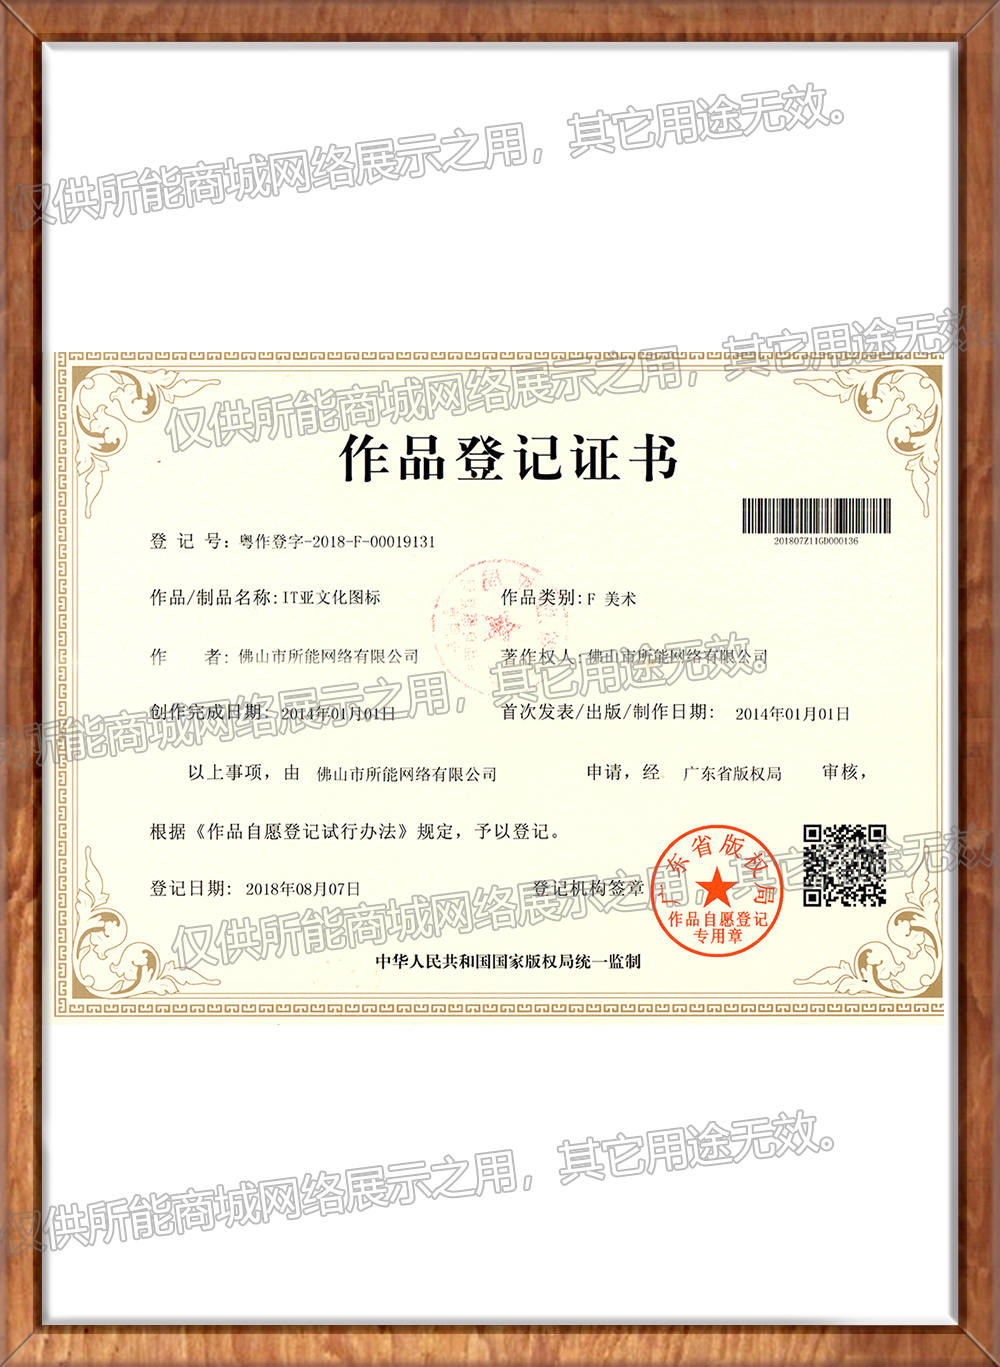 《IT亚文化图标》作品登记证书